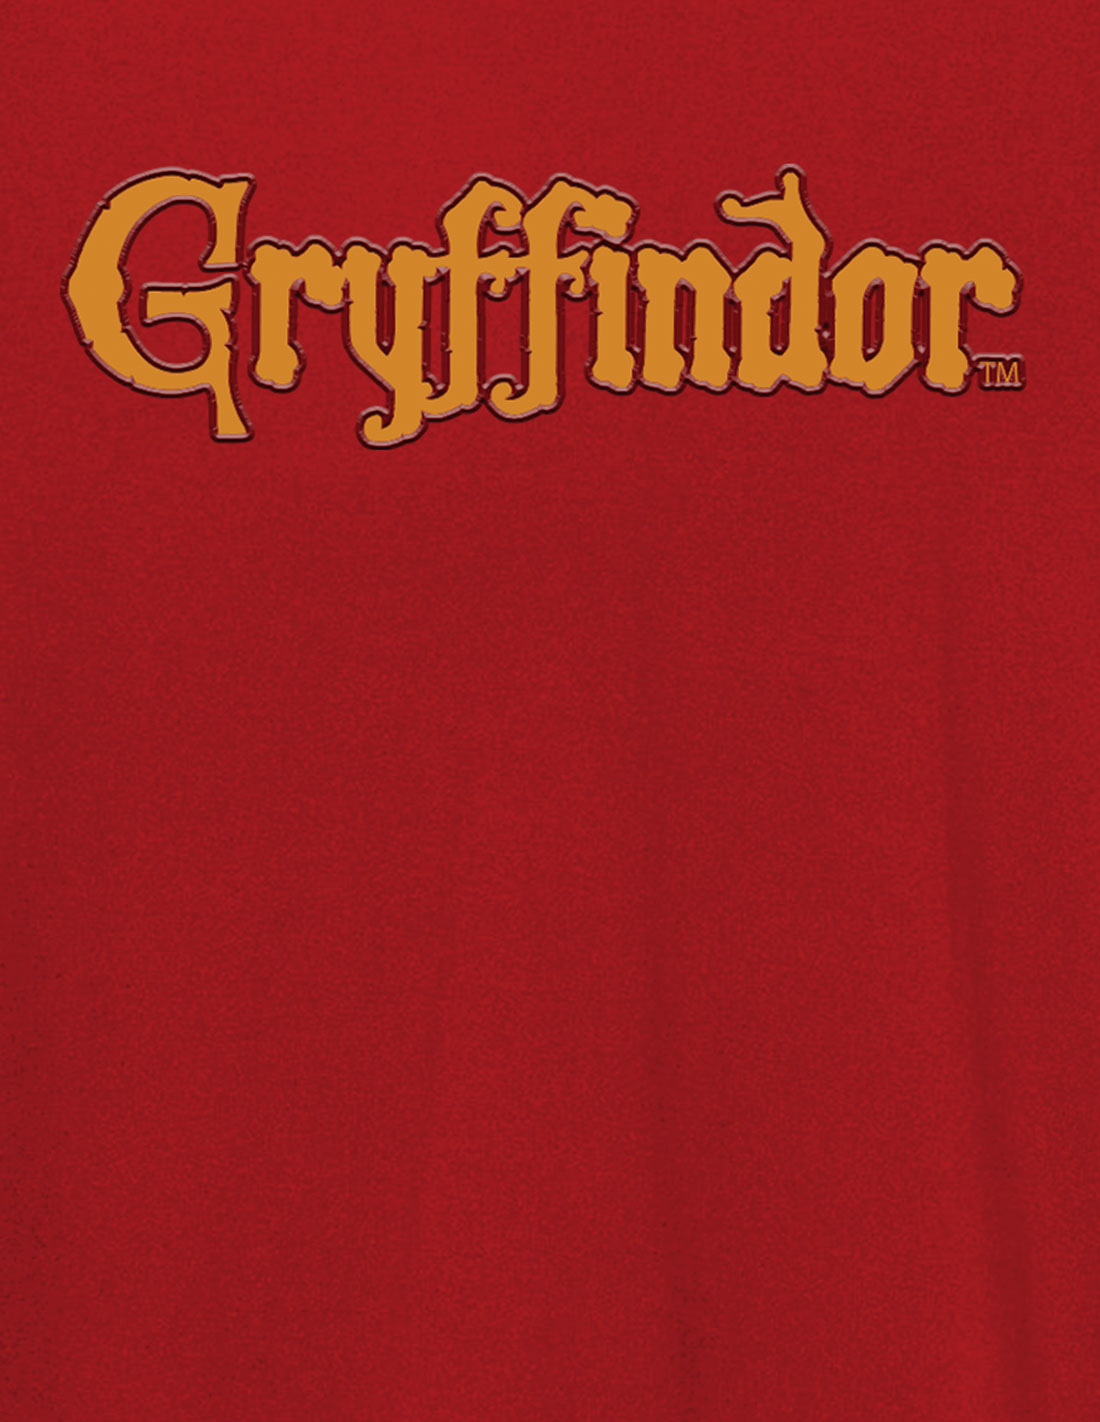 Harry Potter t-shirt - Gryffin Block